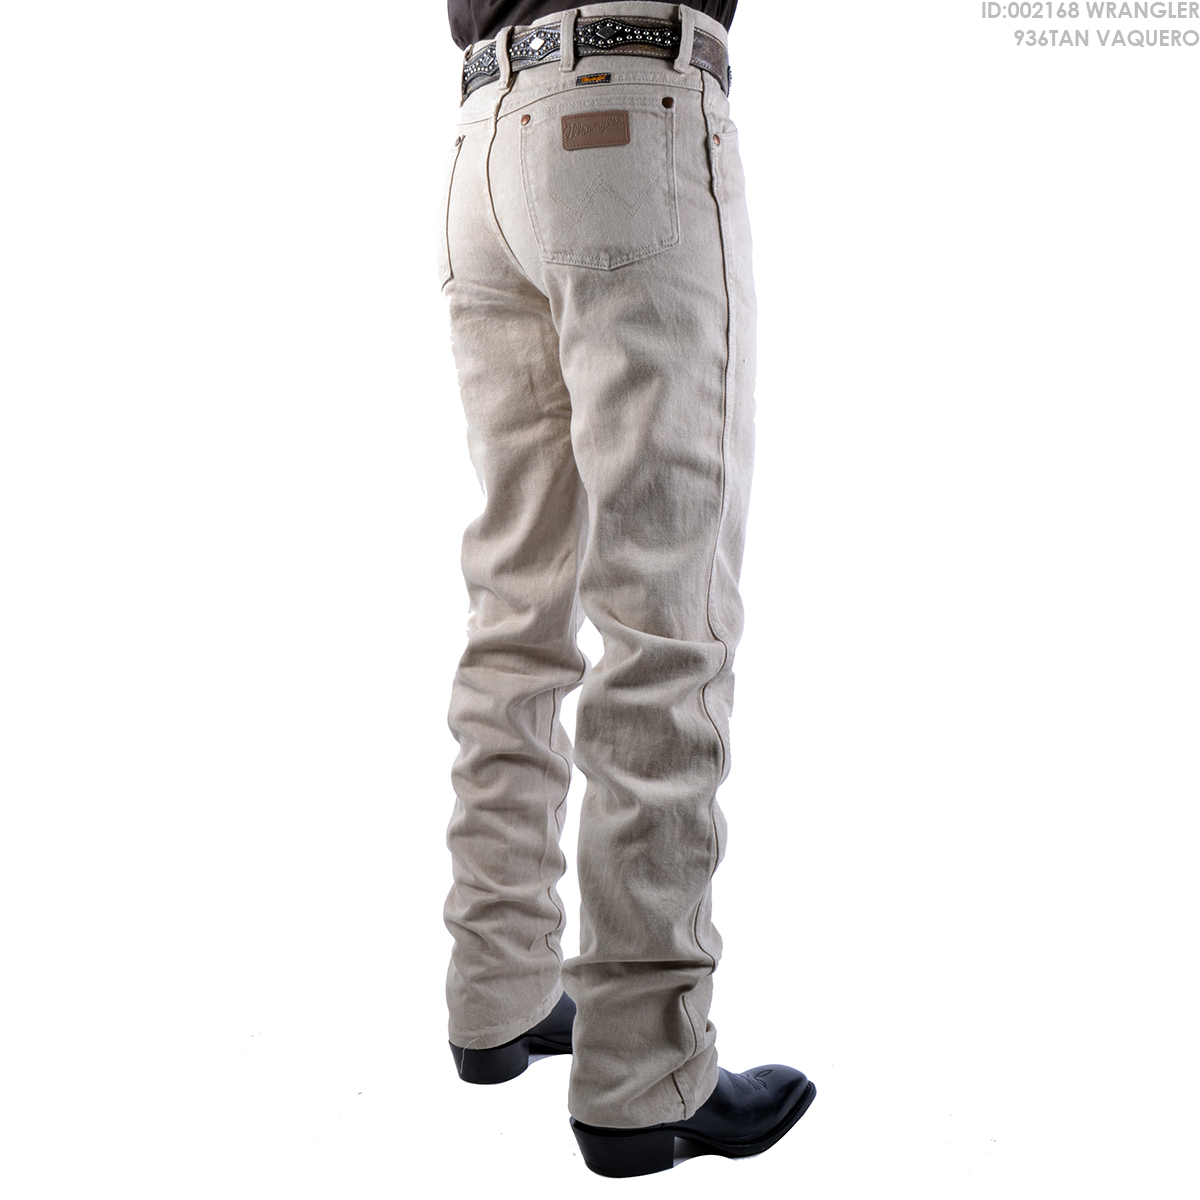 Pantalon Wrangler 936Tan Vaquero - Color: Beige - JR Western